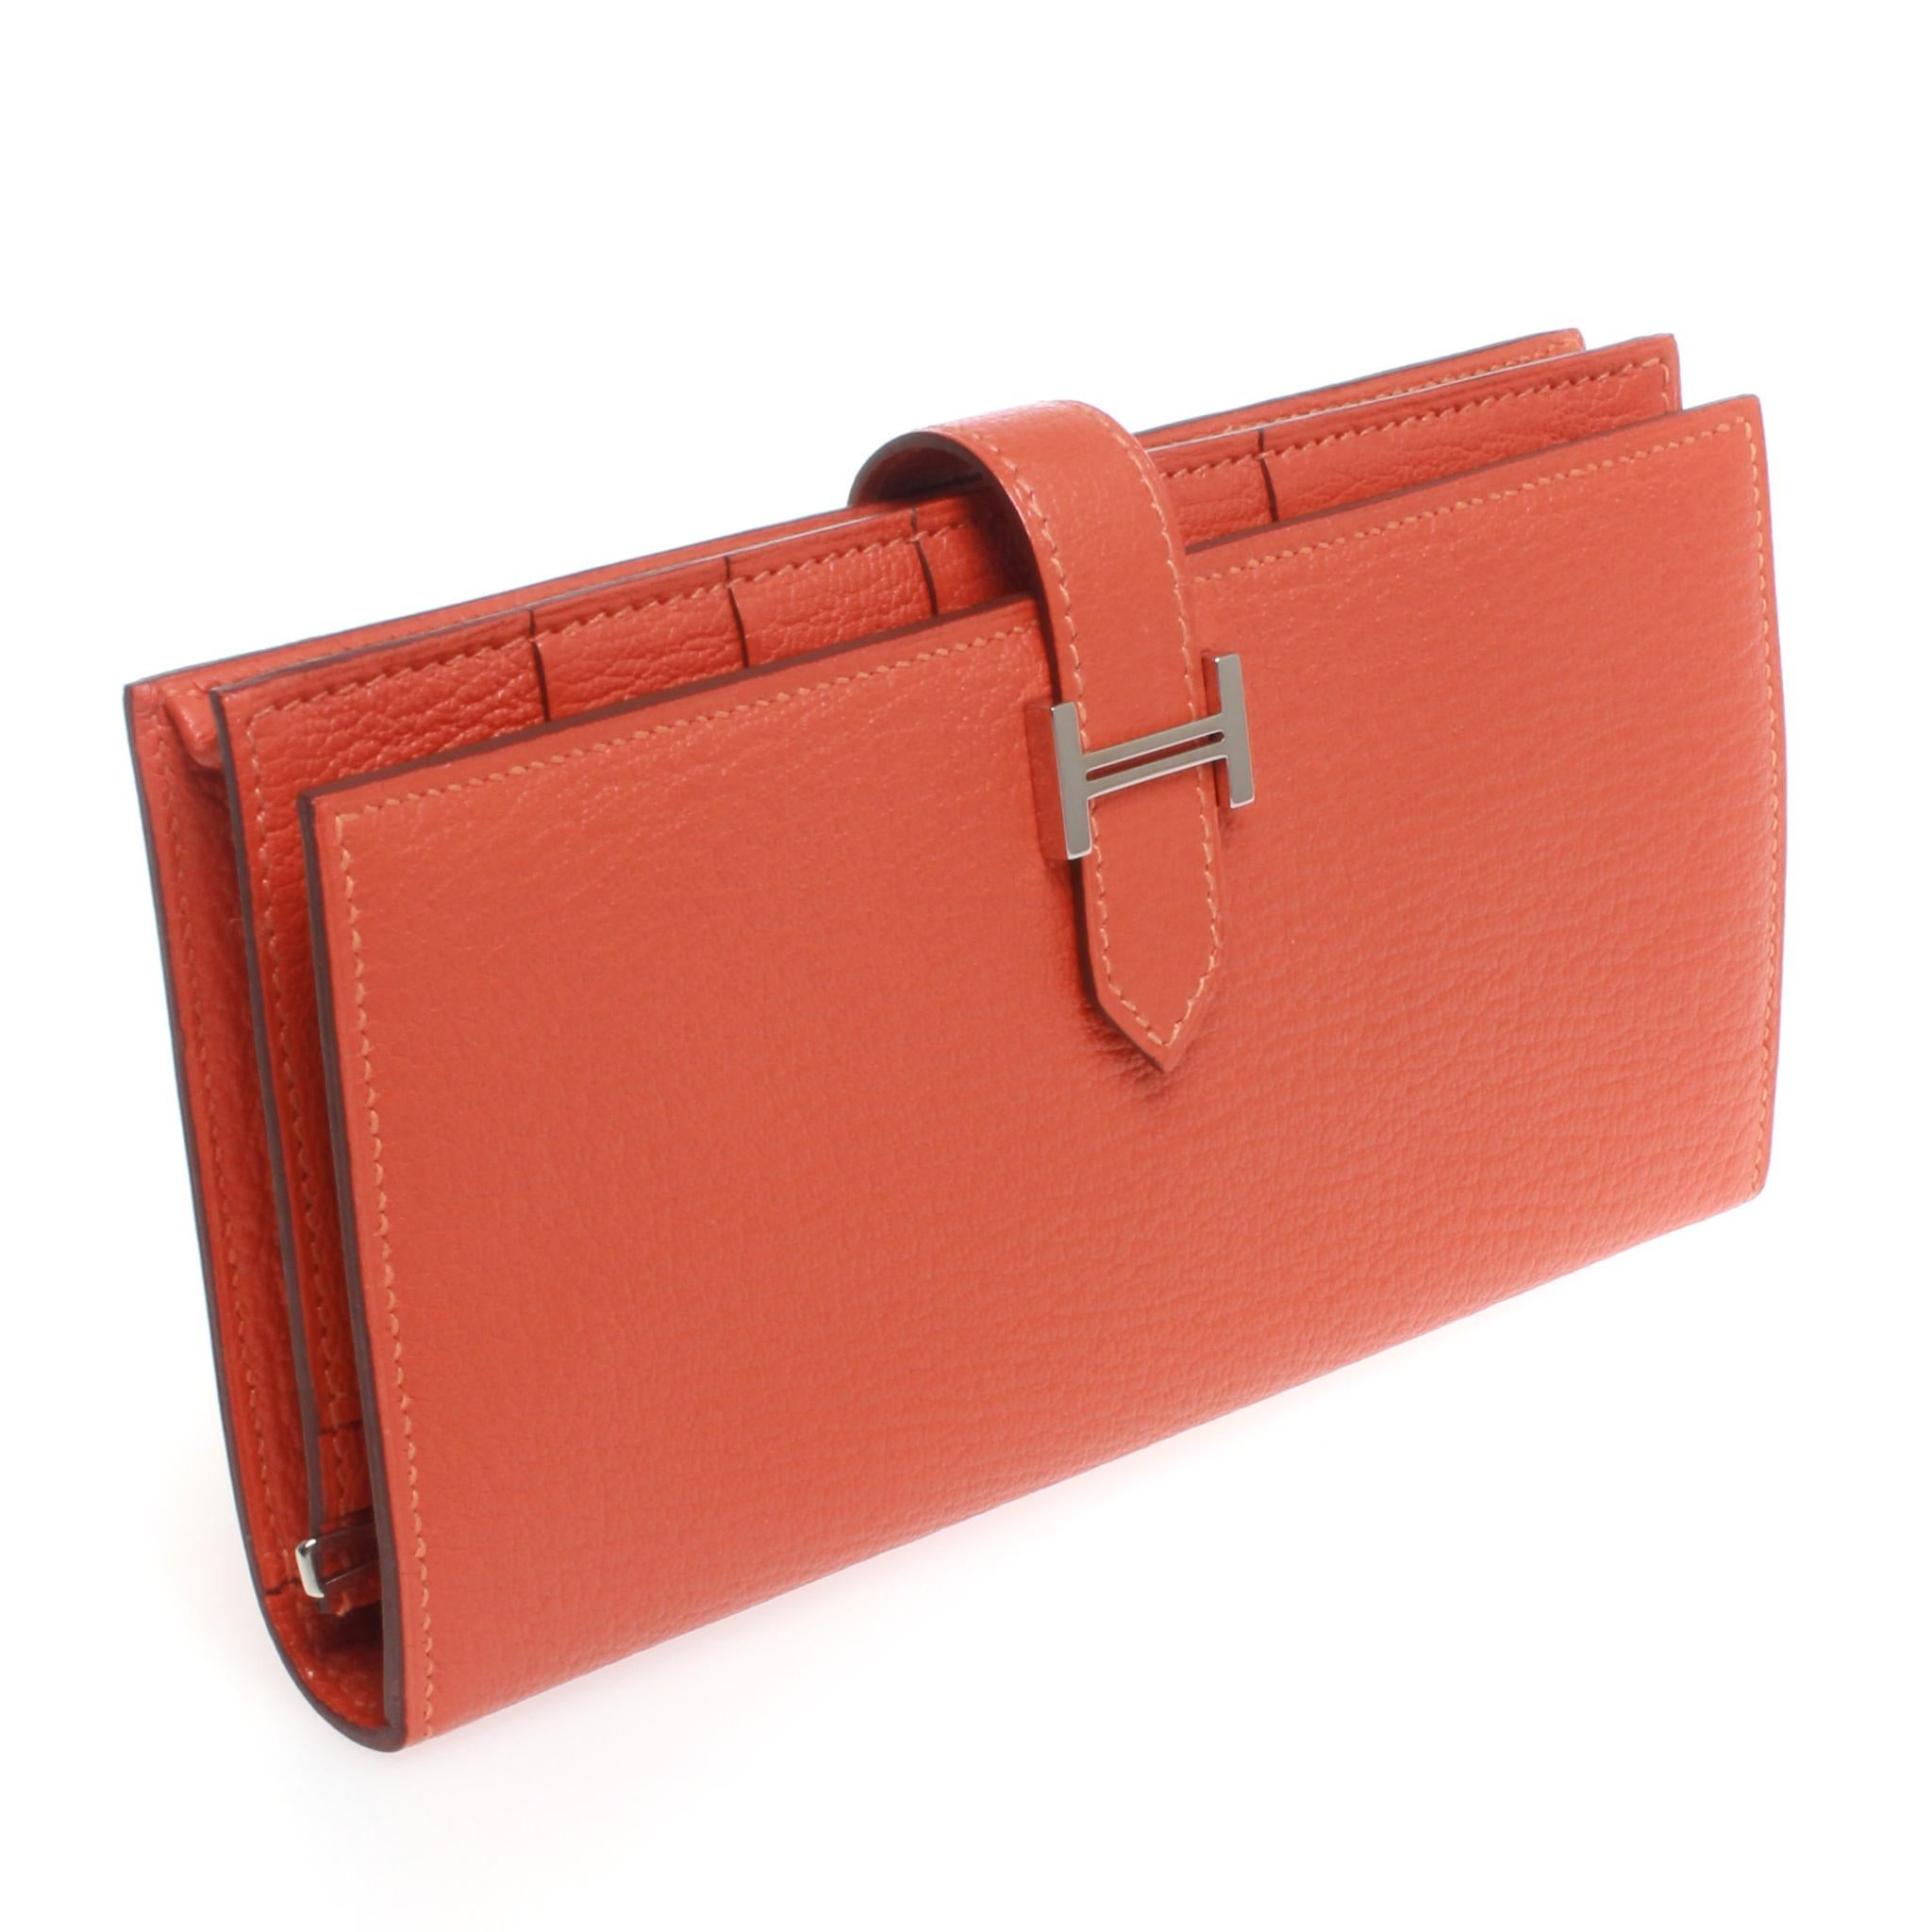 Hermes orange Bearn Wallet, with original box